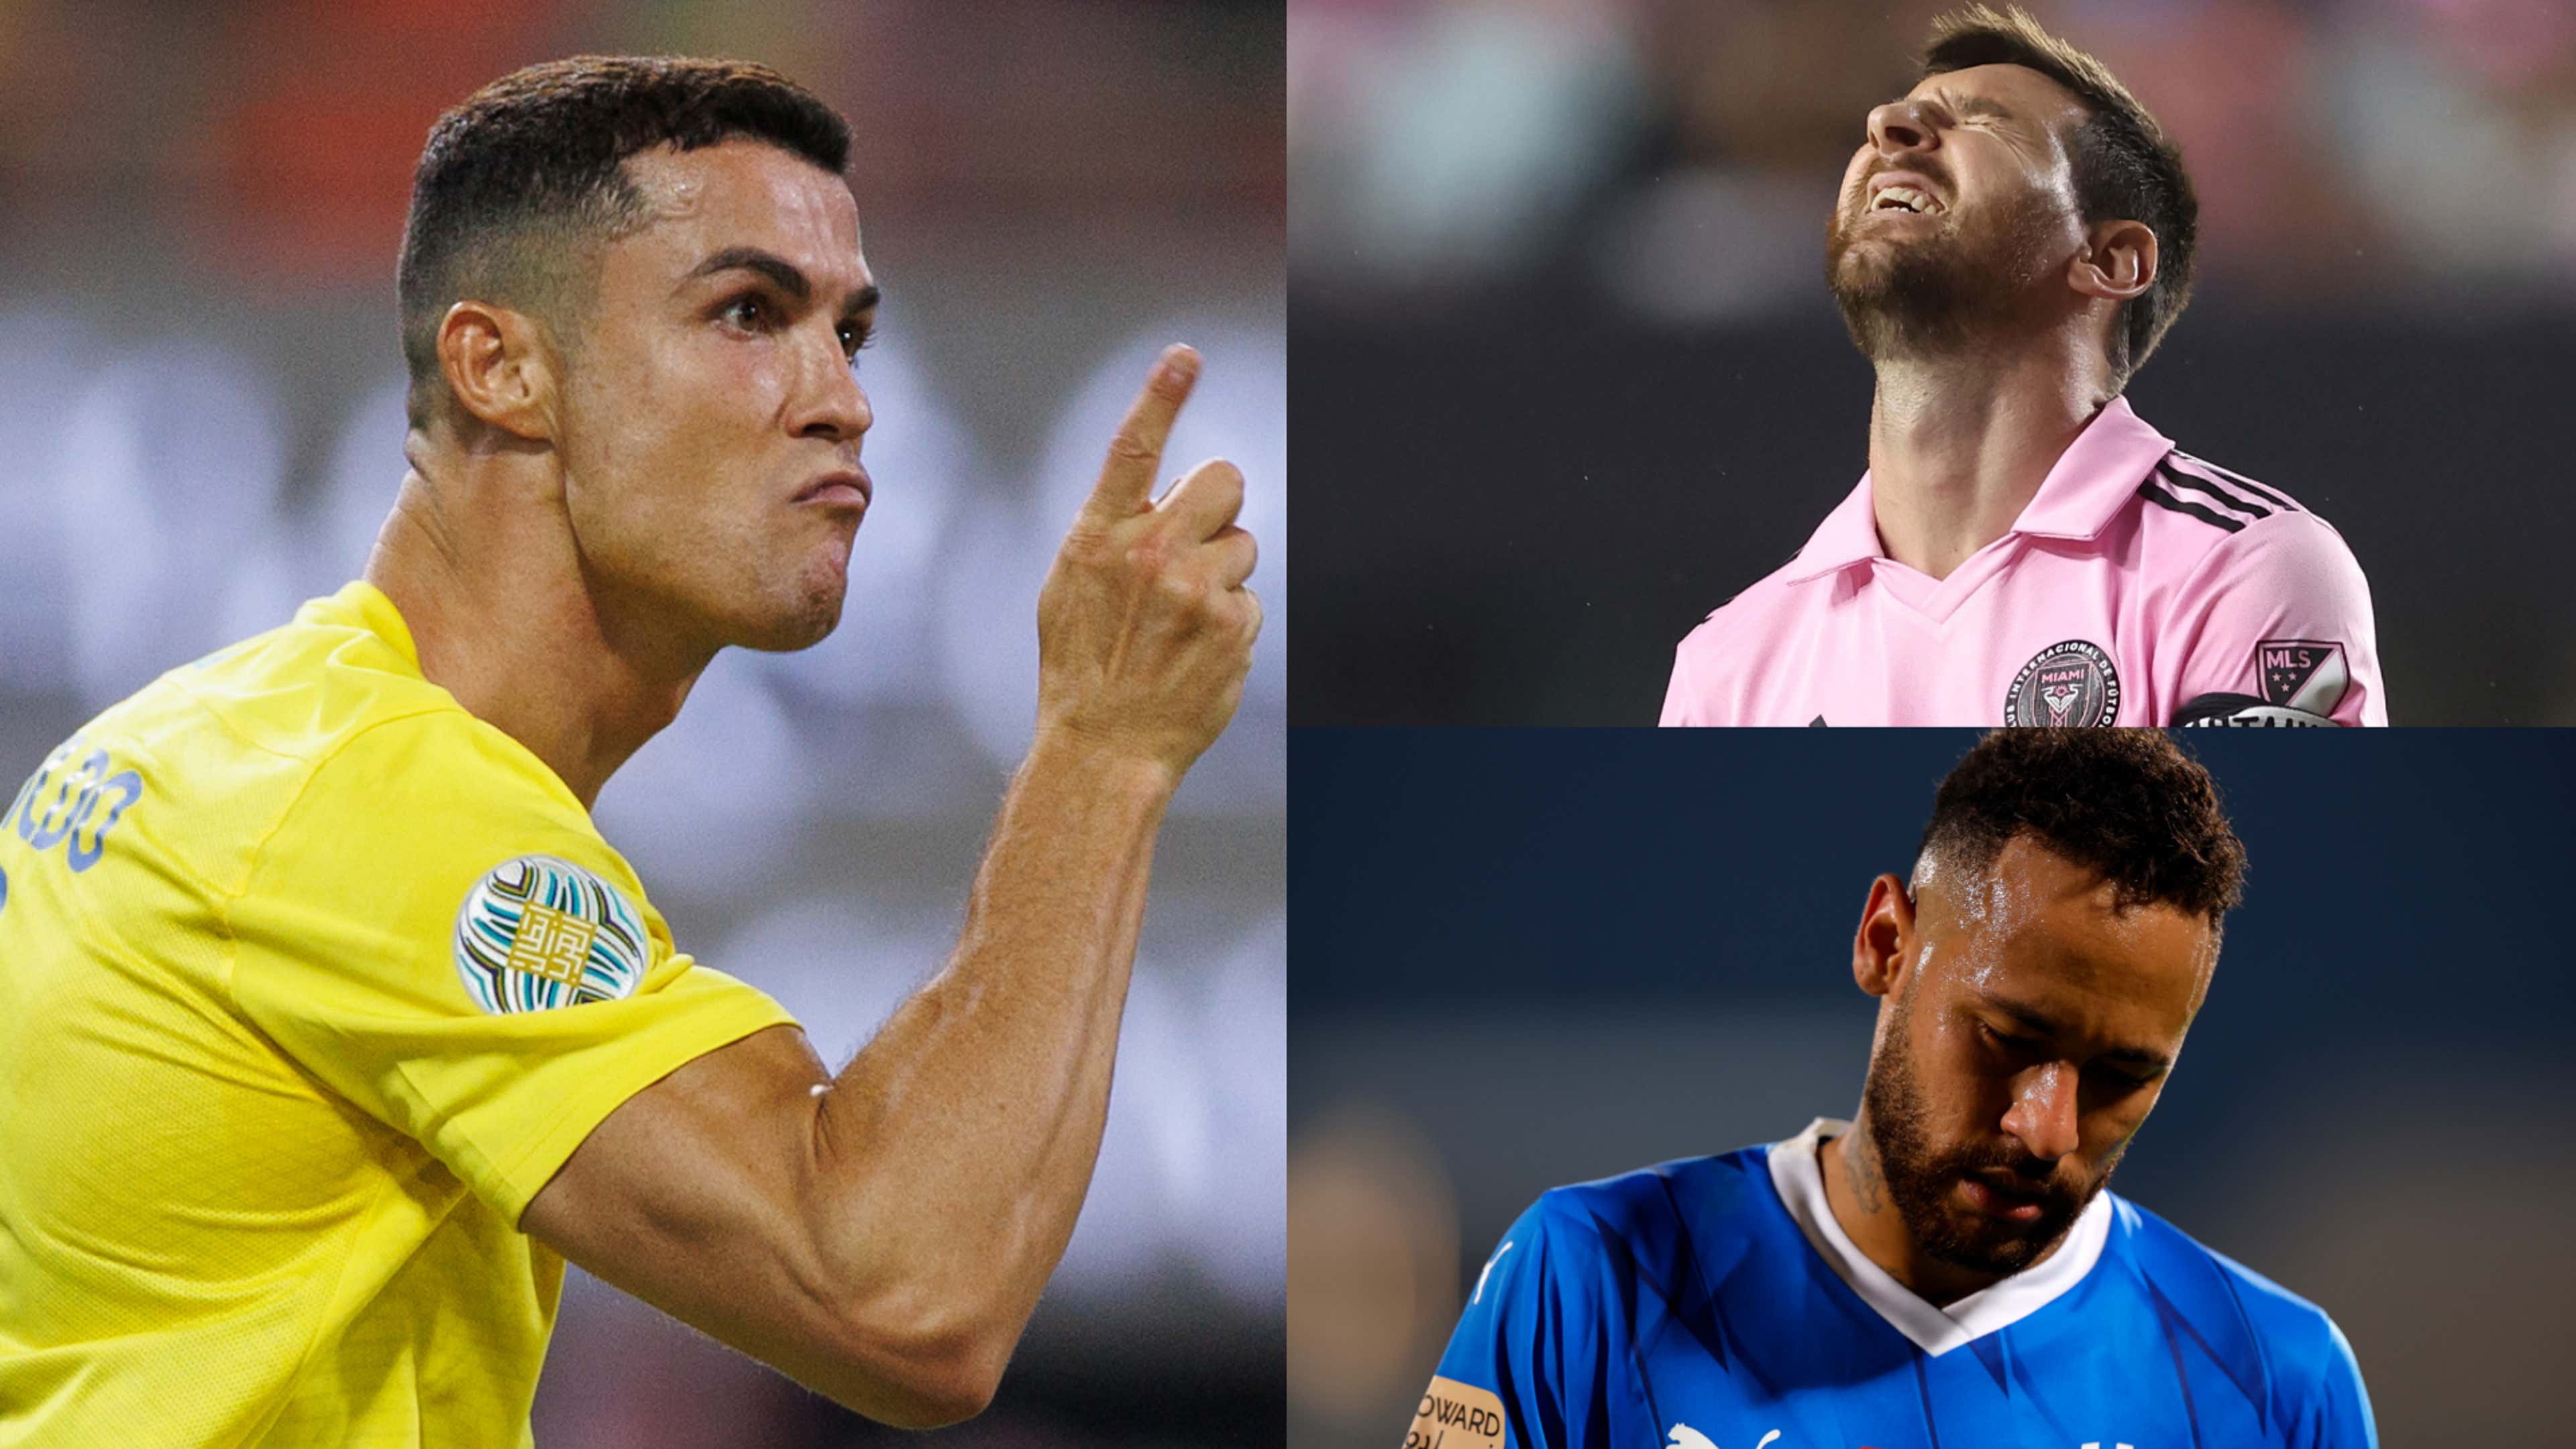 Cristiano Ronaldo, Lionel Messi, Neymar or Kylian Mbappe? Top 10